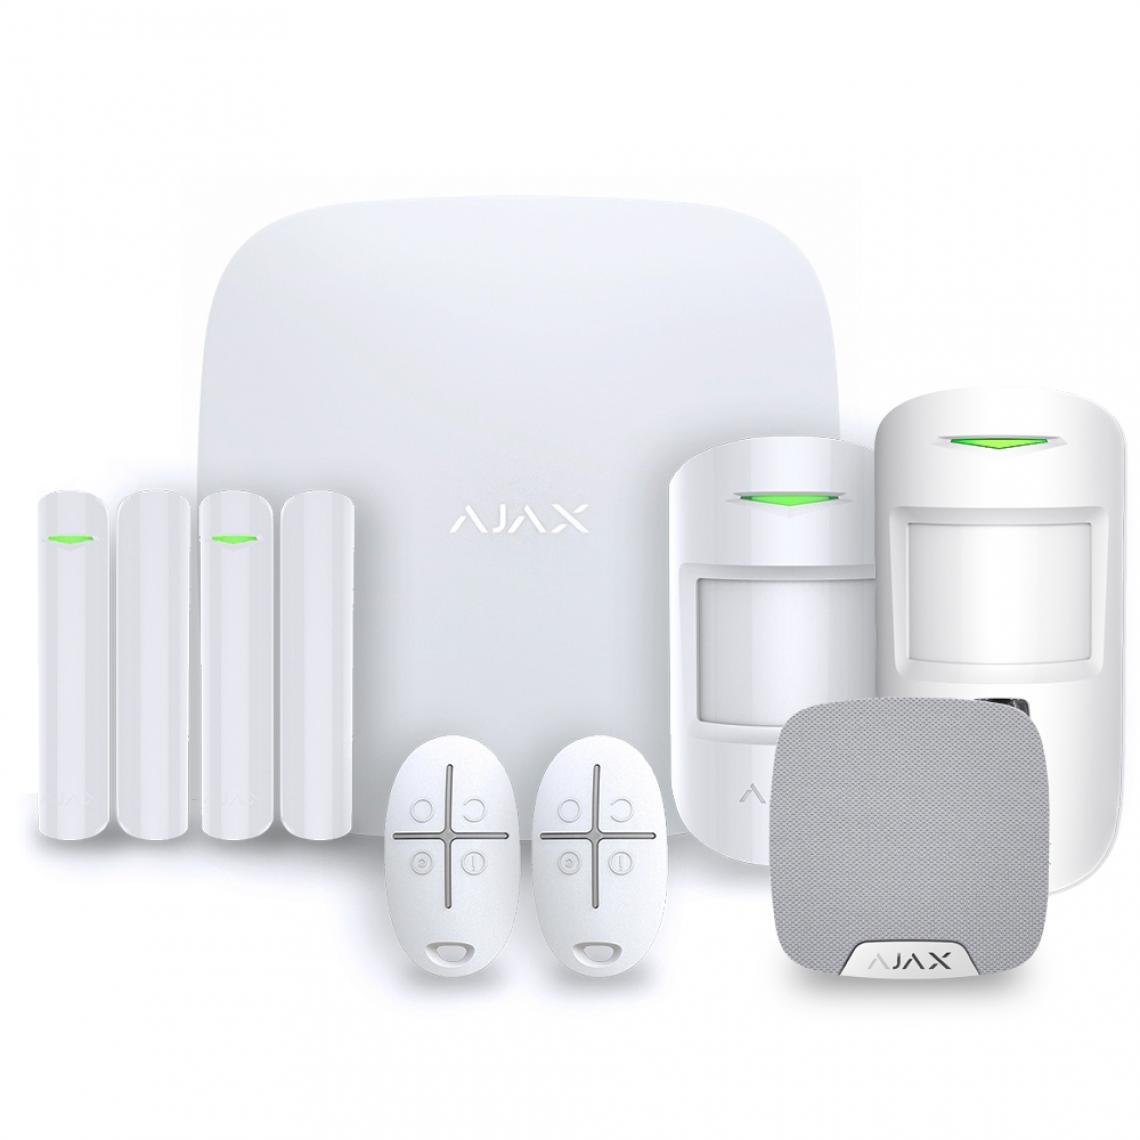 Ajax Systems - AJAX HUB 2 PLUS KIT 2W - Alarme connectée